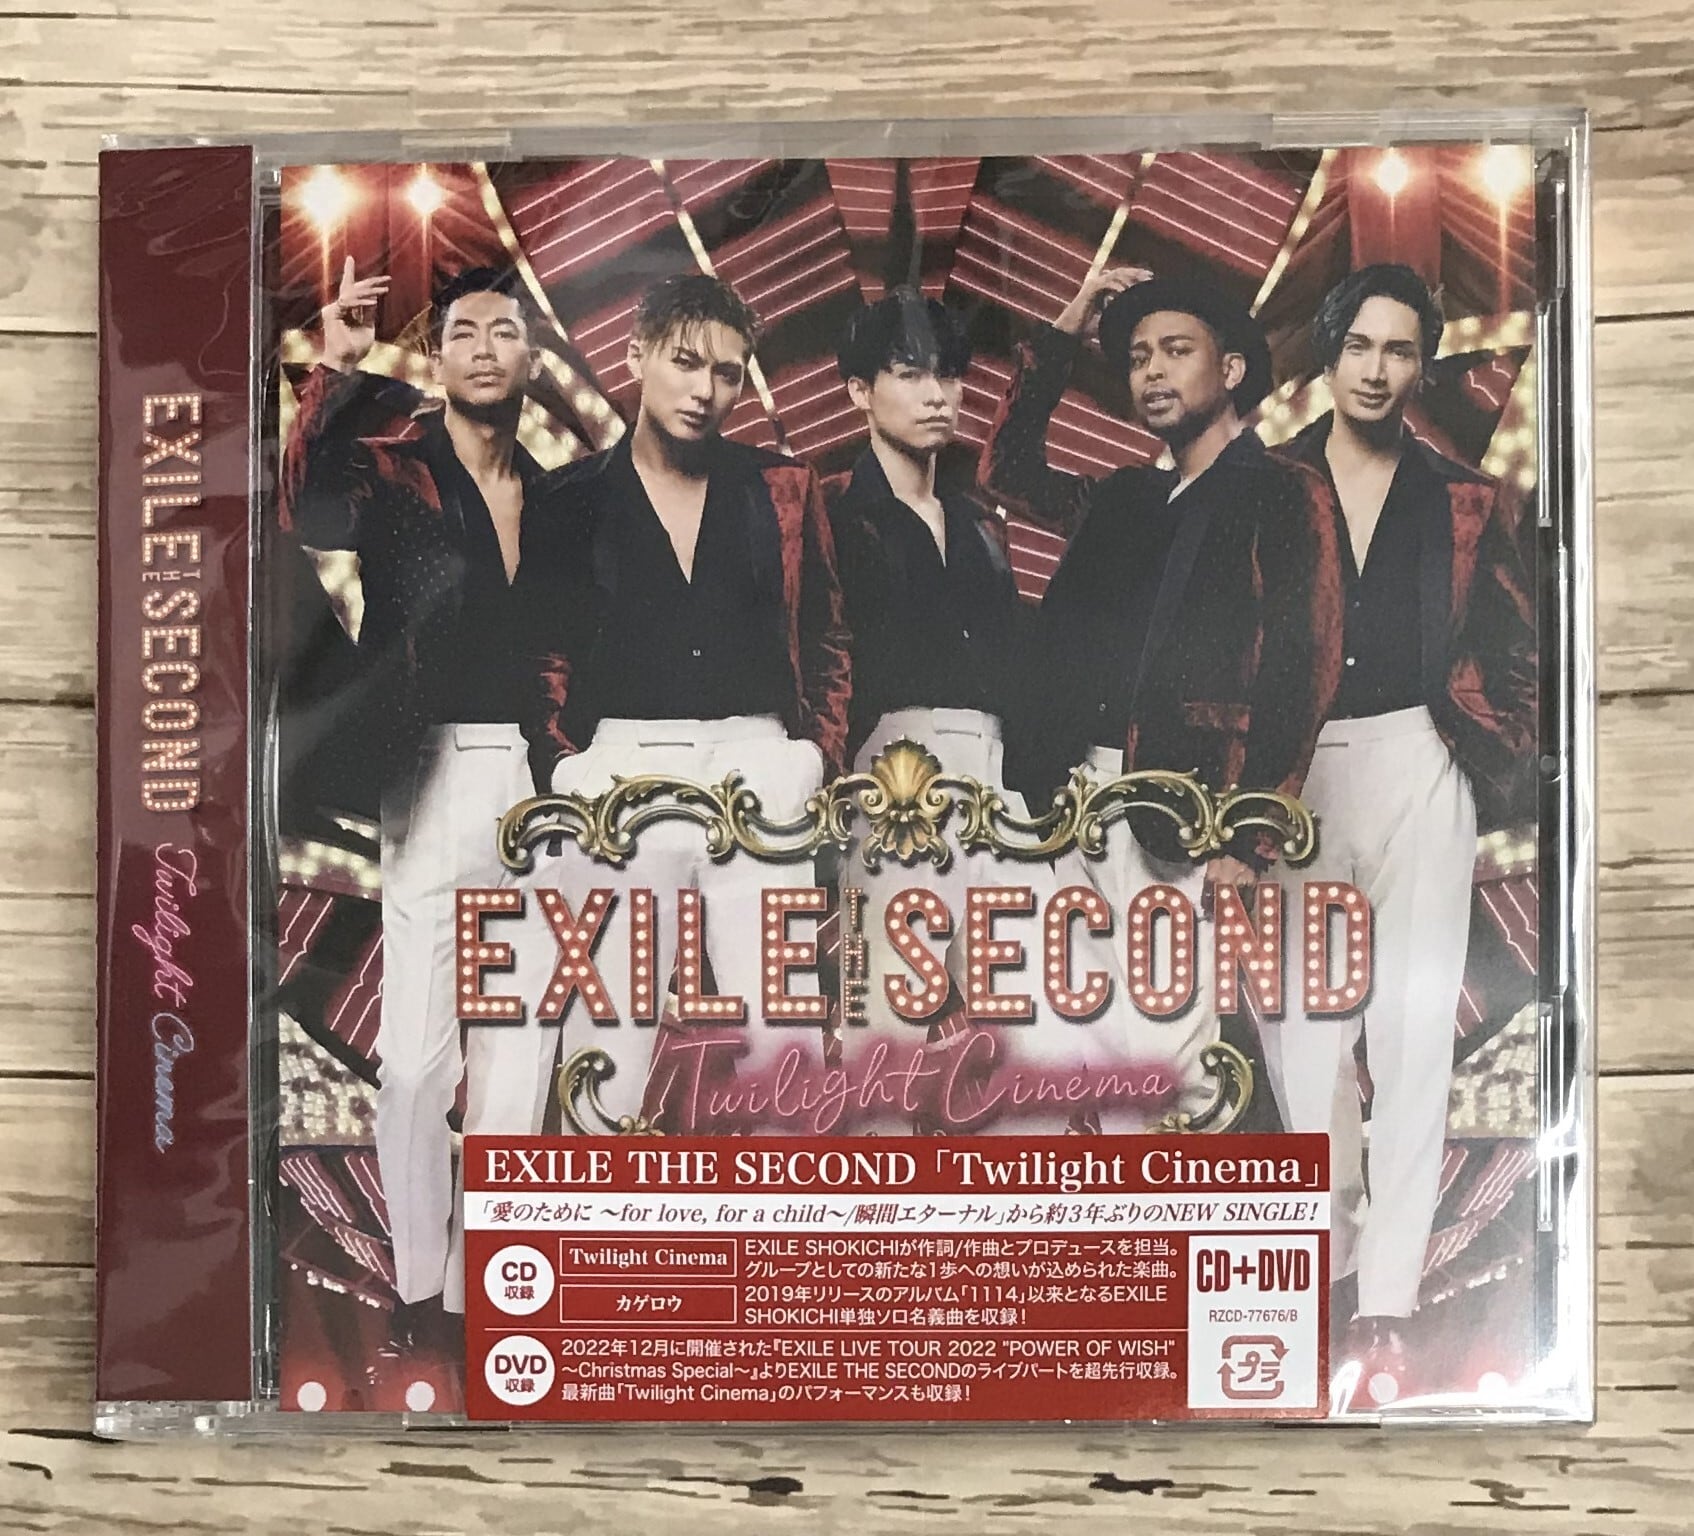 EXILE SHOKICHI アルバム　1114 CD＋DVD初回限定版